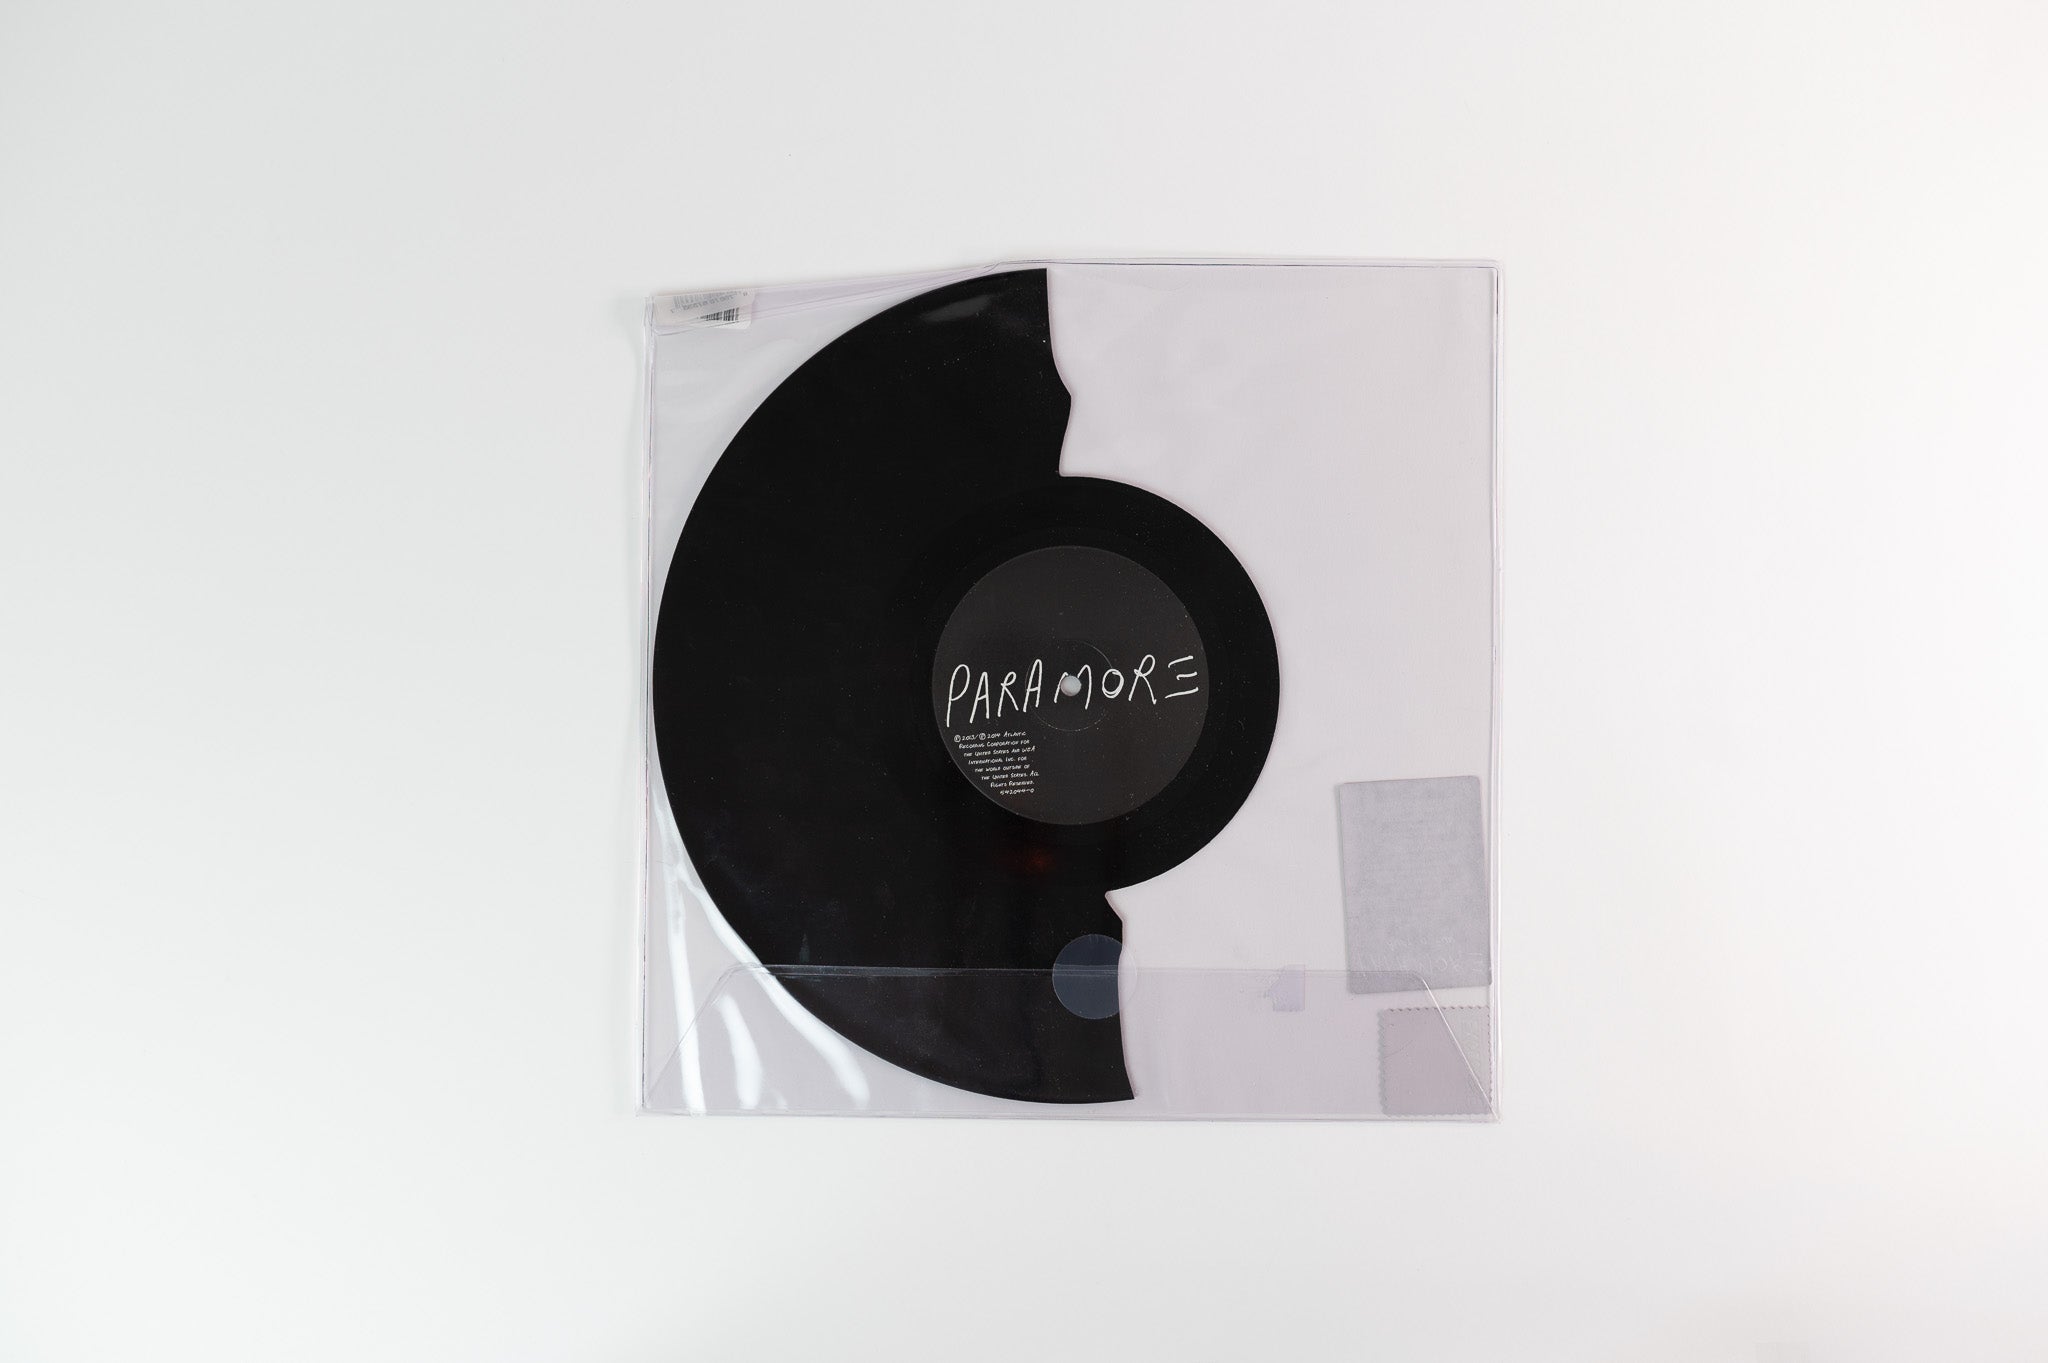 Paramore - Ain't It Fun on Atlantic - RSD Shaped 12" Single